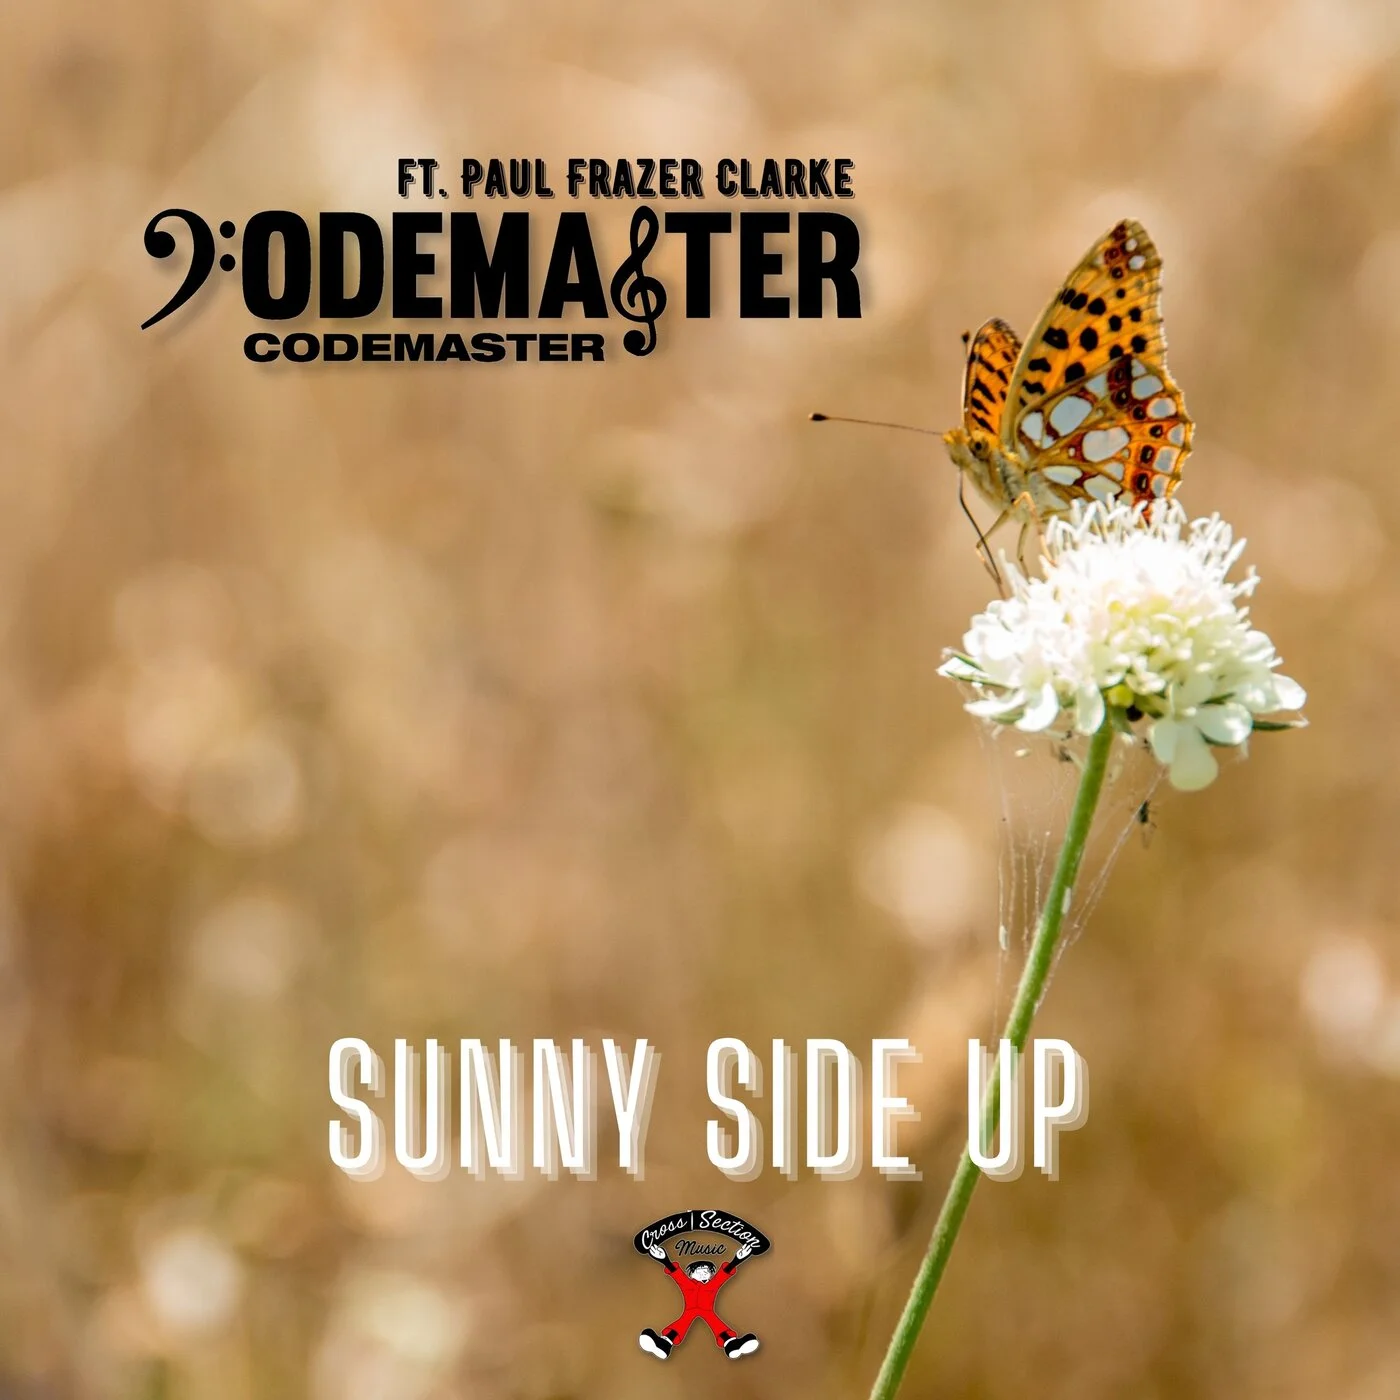 Paul Frazer Clarke Codemaster - Sunny Side Up (Original Mix)